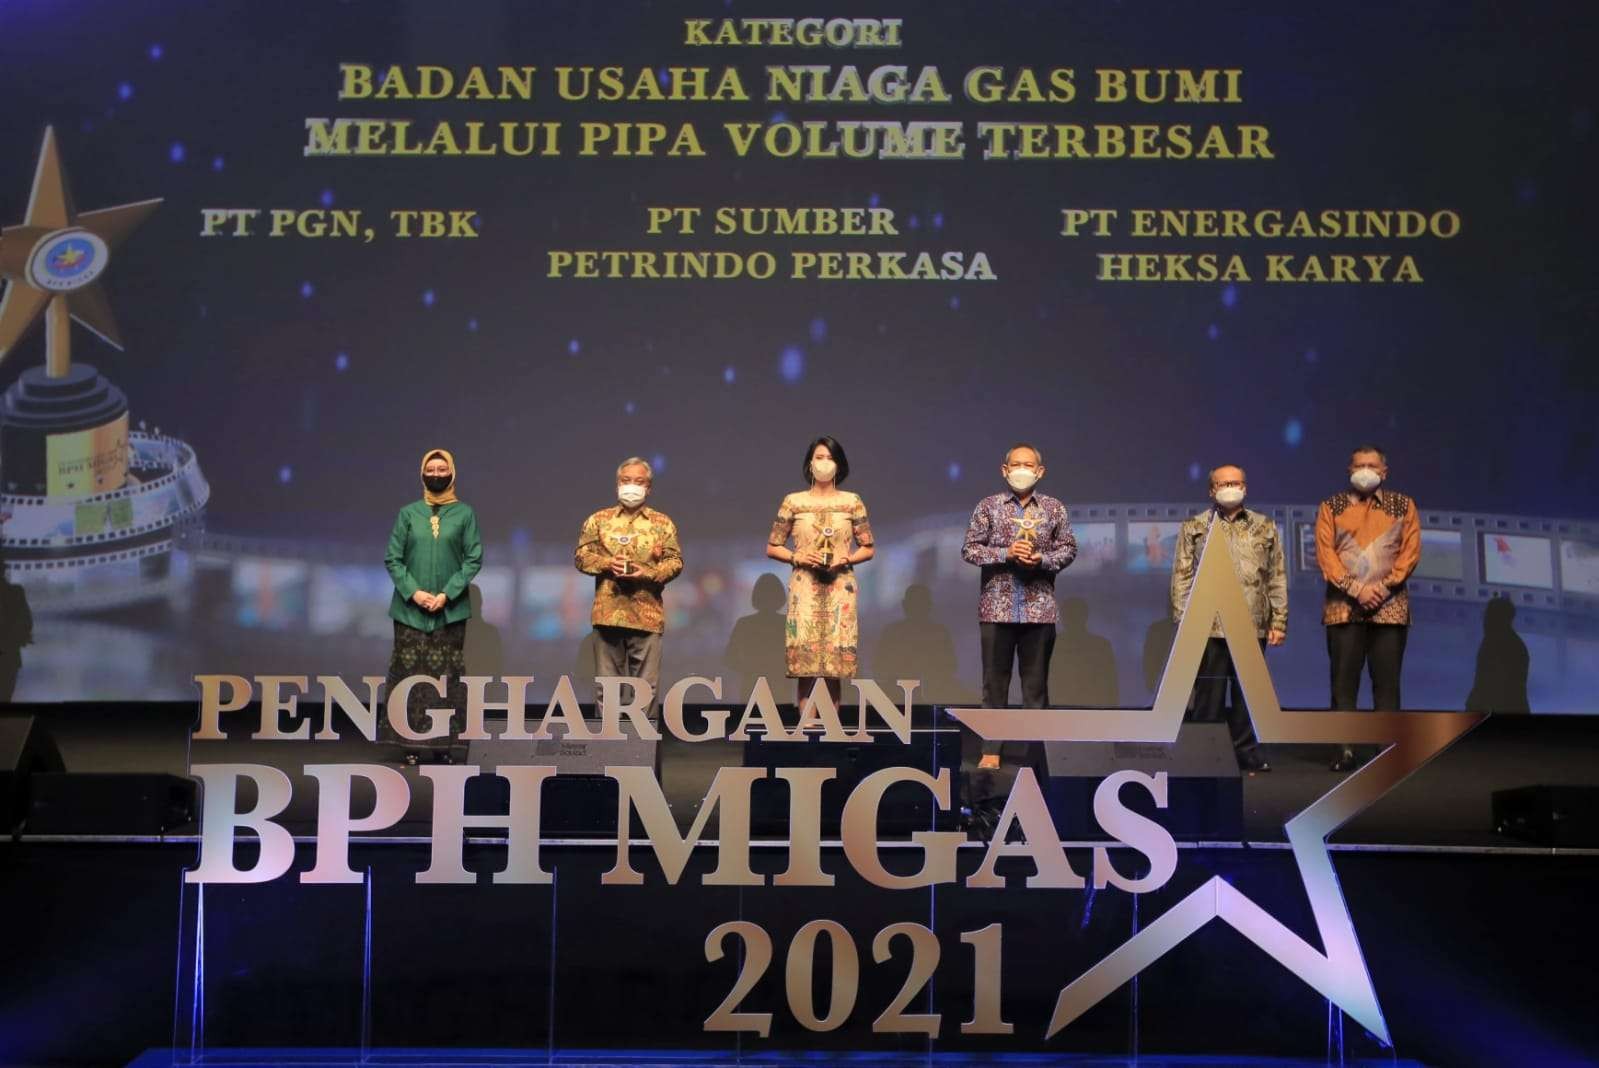 PGN Subholding Gas Pertamina raih lima kategori penghargaan BPH Migas 2021. (Foto: Istimewa)